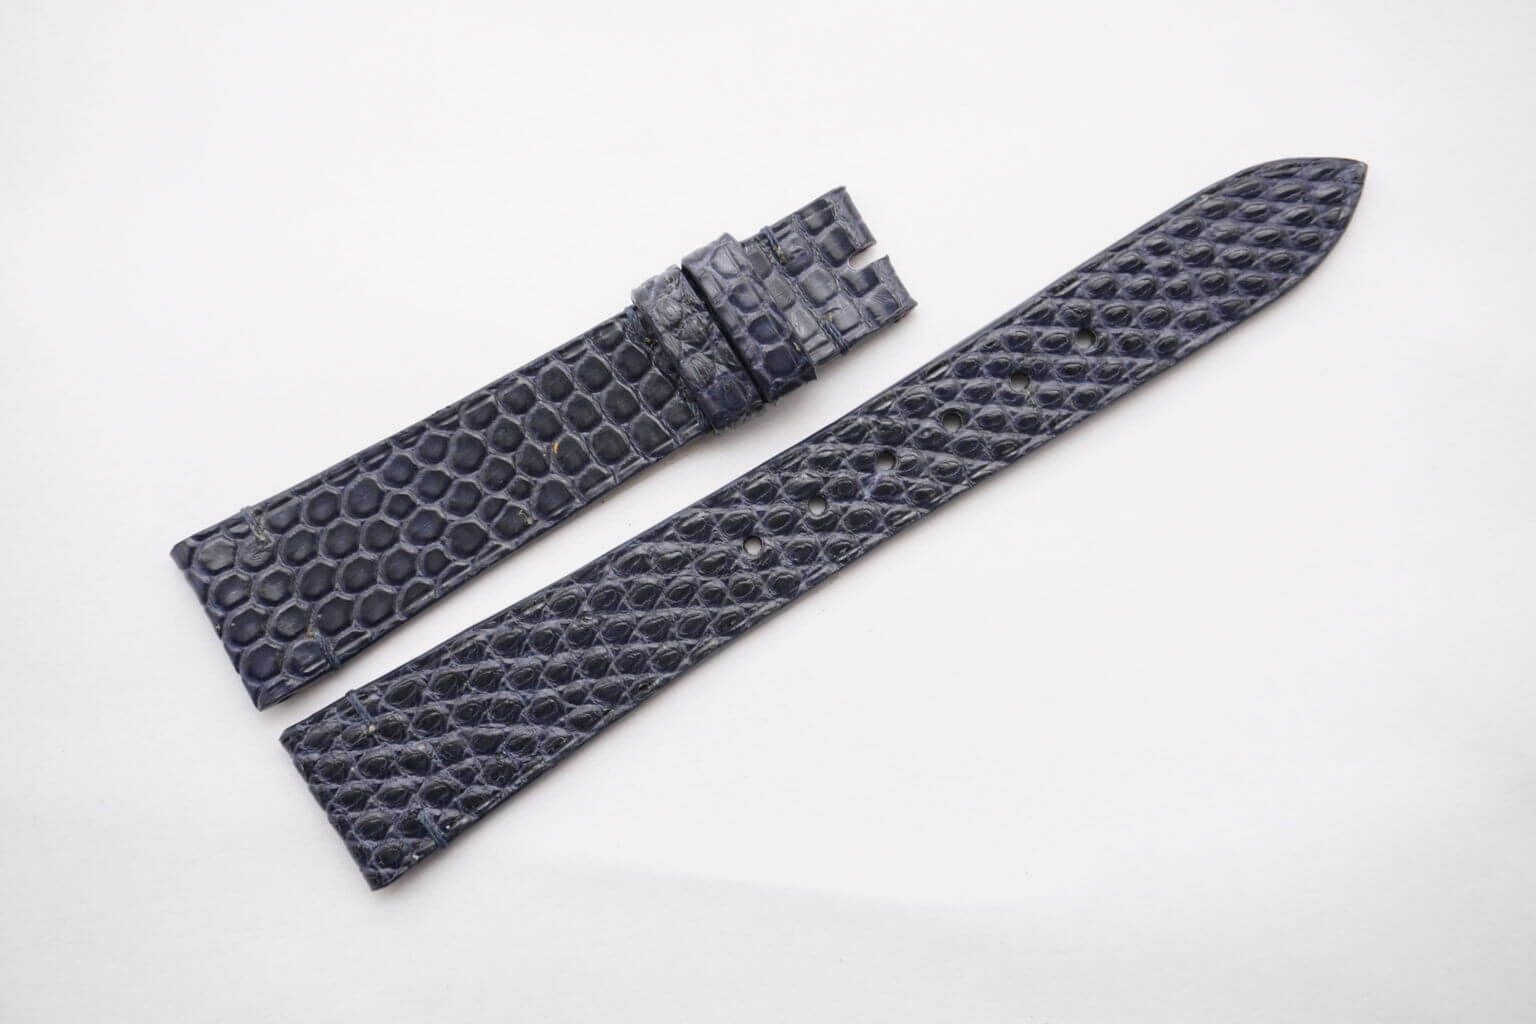 Black snakeskin leather watch strap by Zic Zac Leather